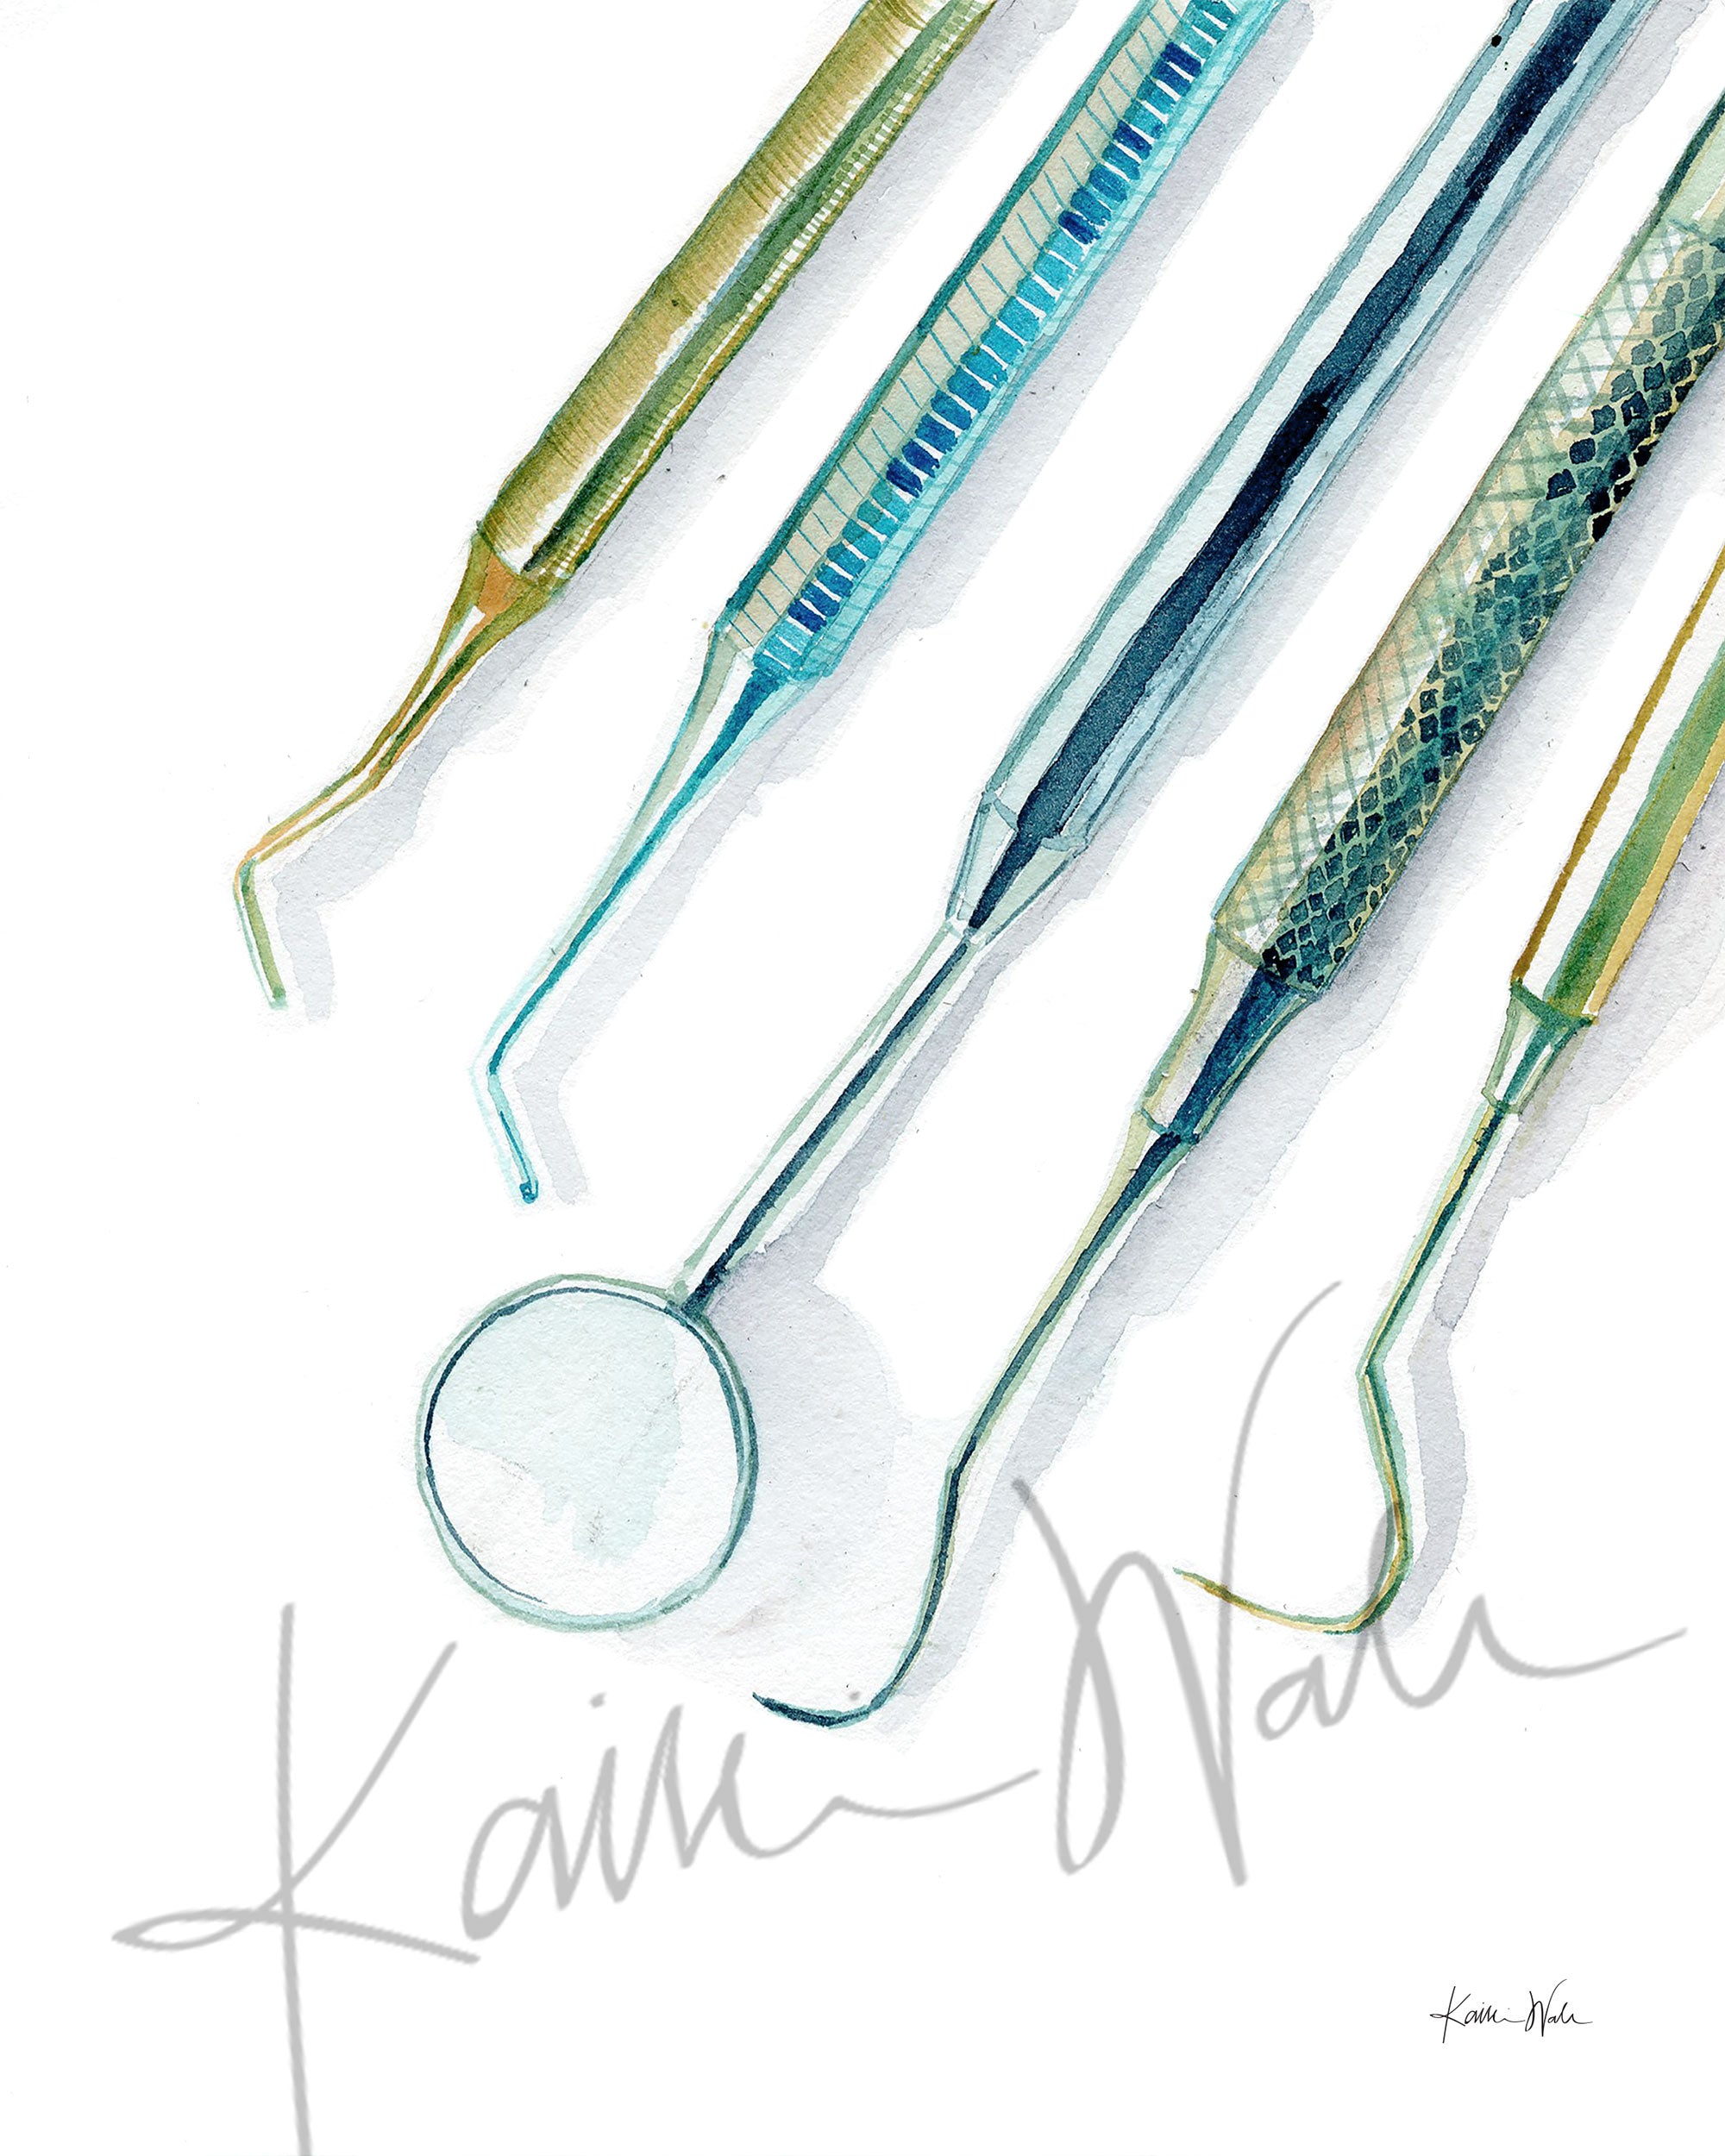 Unframed watercolor print of dental hygienist tools.